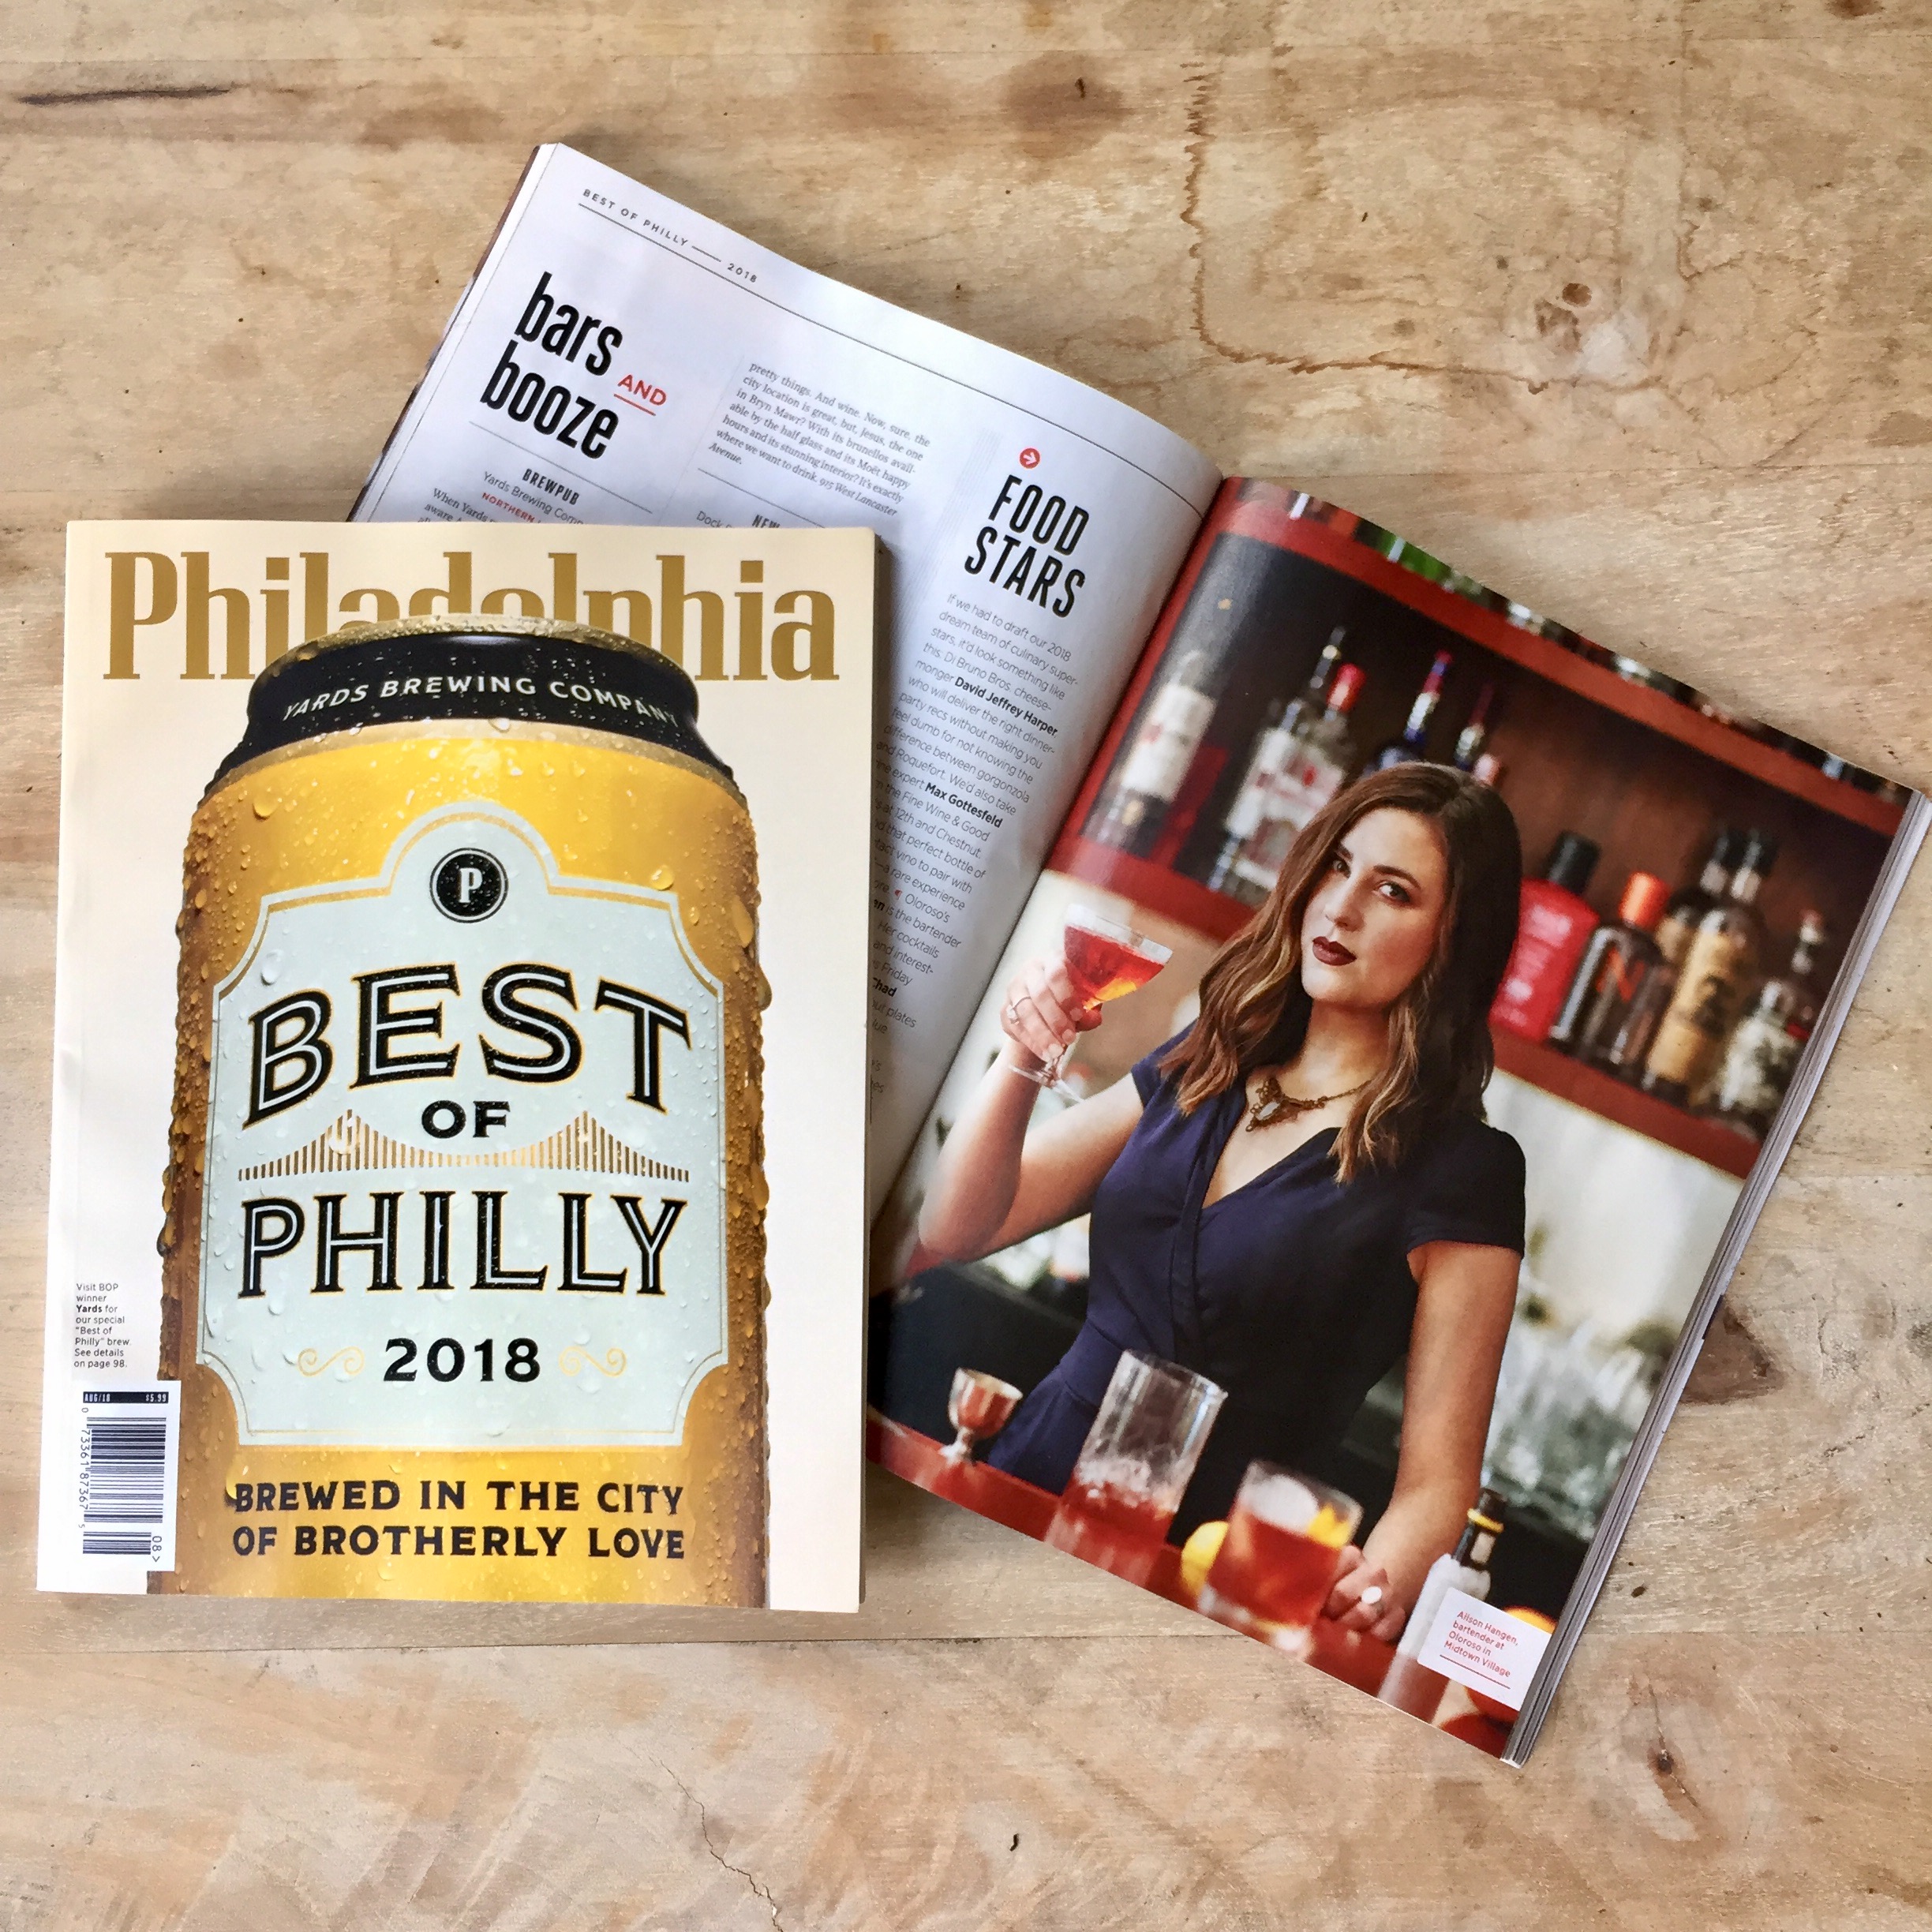 Philadelphia Magazine’s Best of Philly 2018!